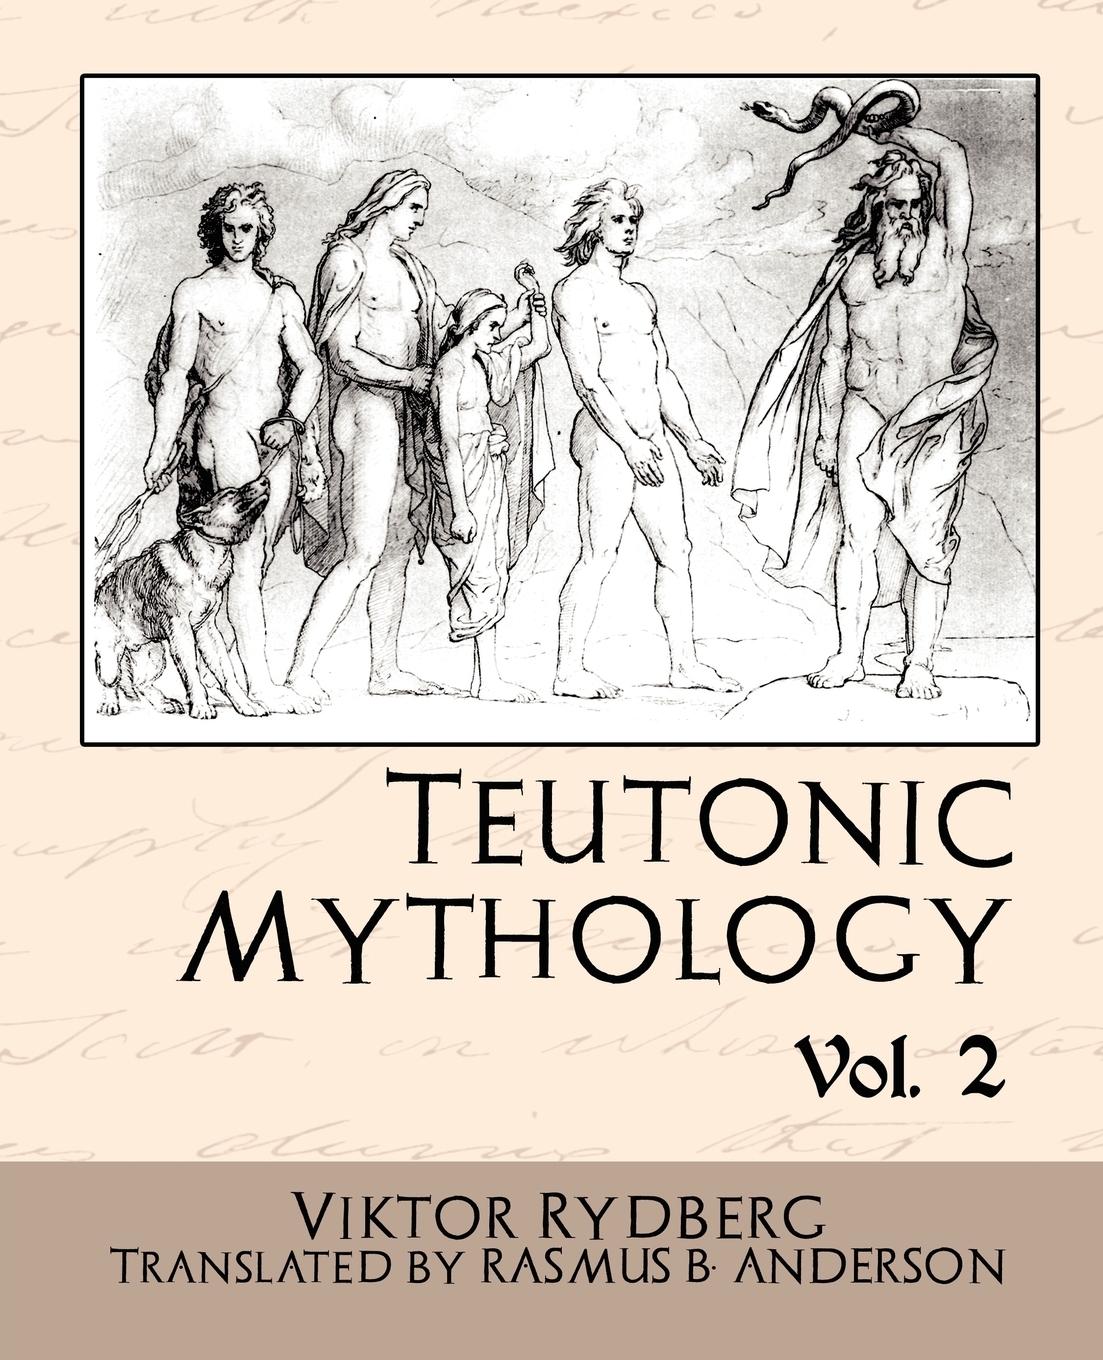 Teutonic Mythology Vol 2 - Rydberg, Viktor|Viktor Rydberg, Rydberg|Viktor Rydberg